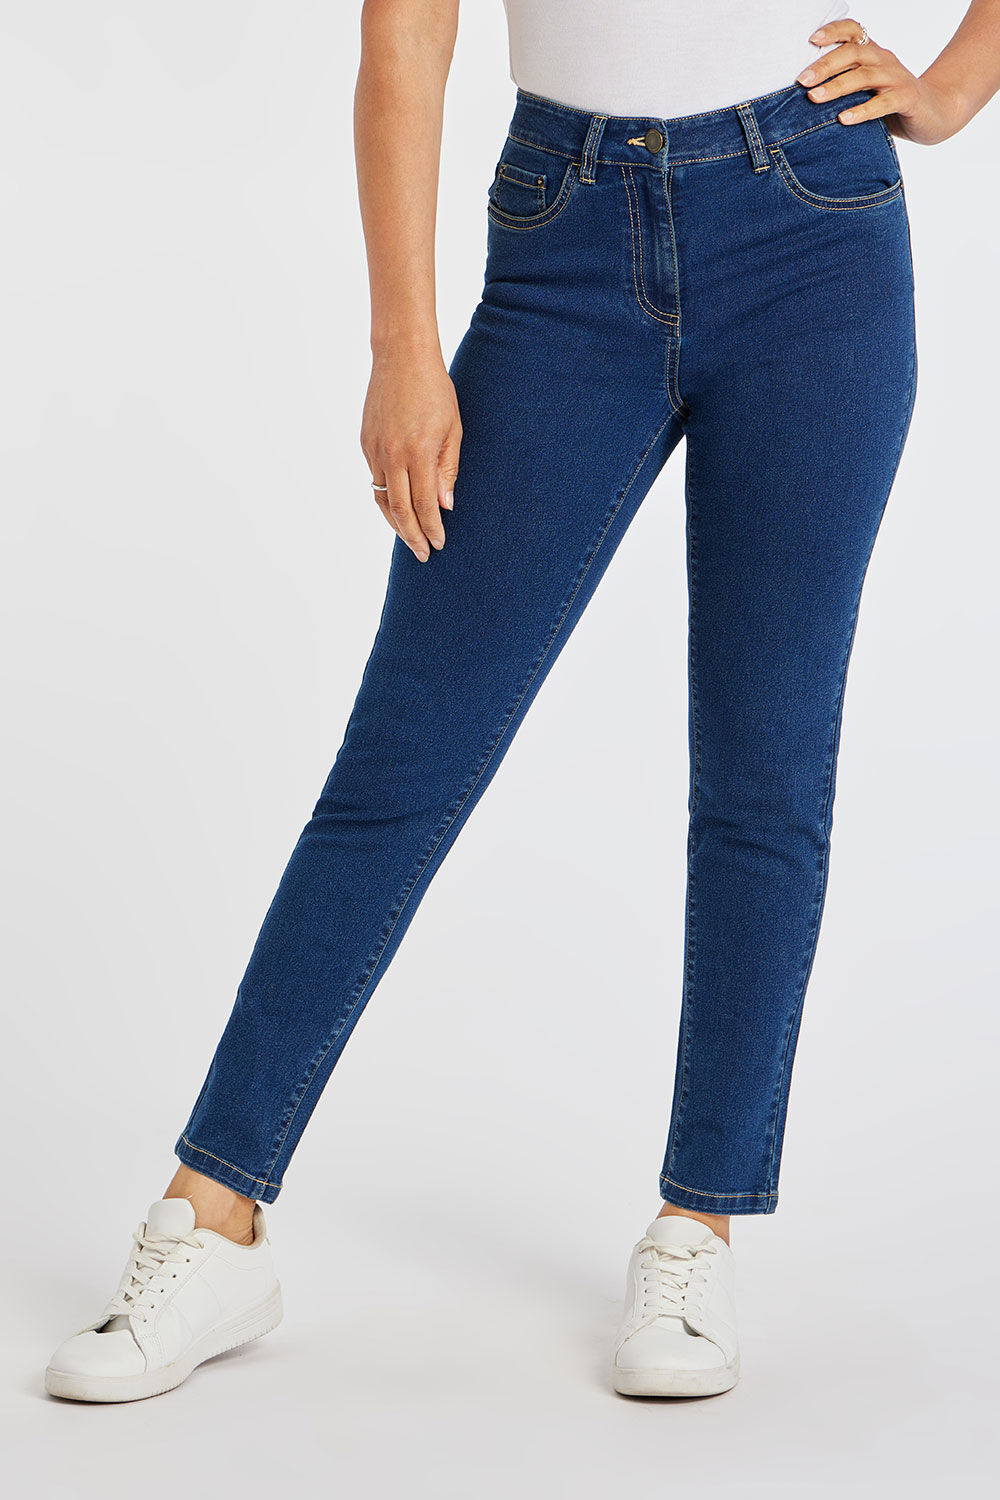 Bonmarche Denim The Susie Slim Leg Jeans, Size: 16